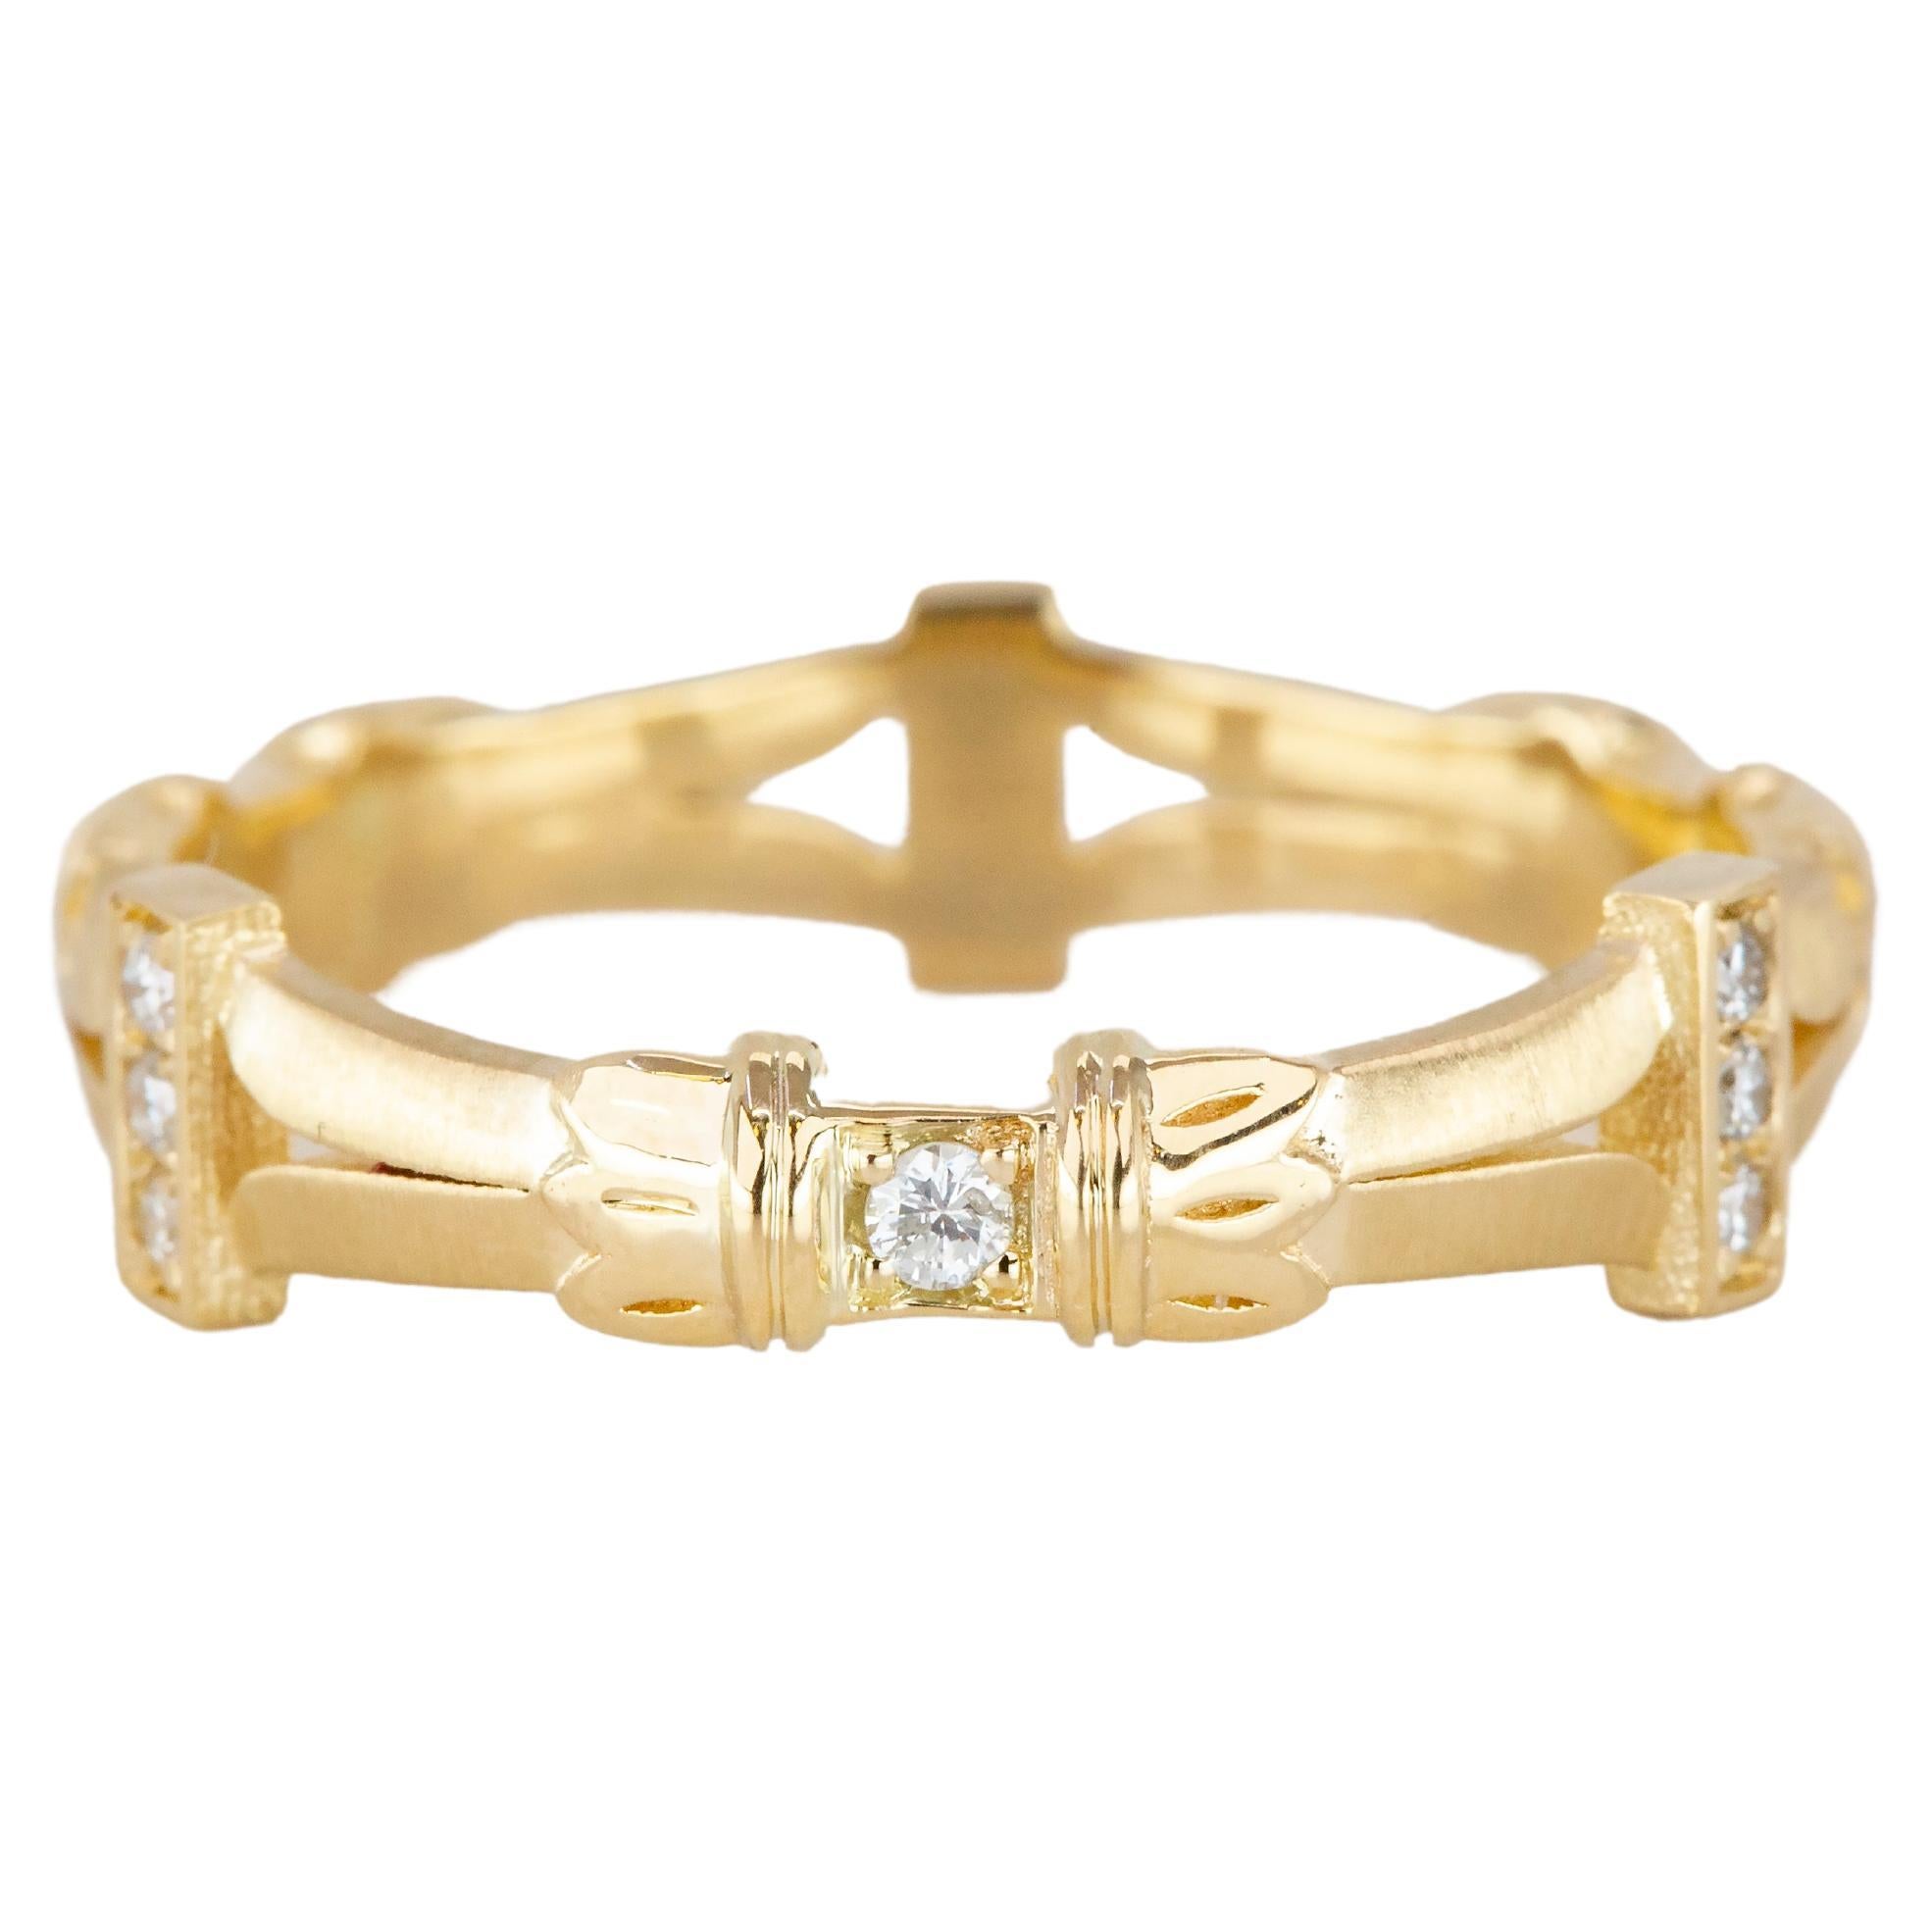 Carine Ring, Vintage Style 14K Gold 0.08 Ct Diamond Wedding Band Ring